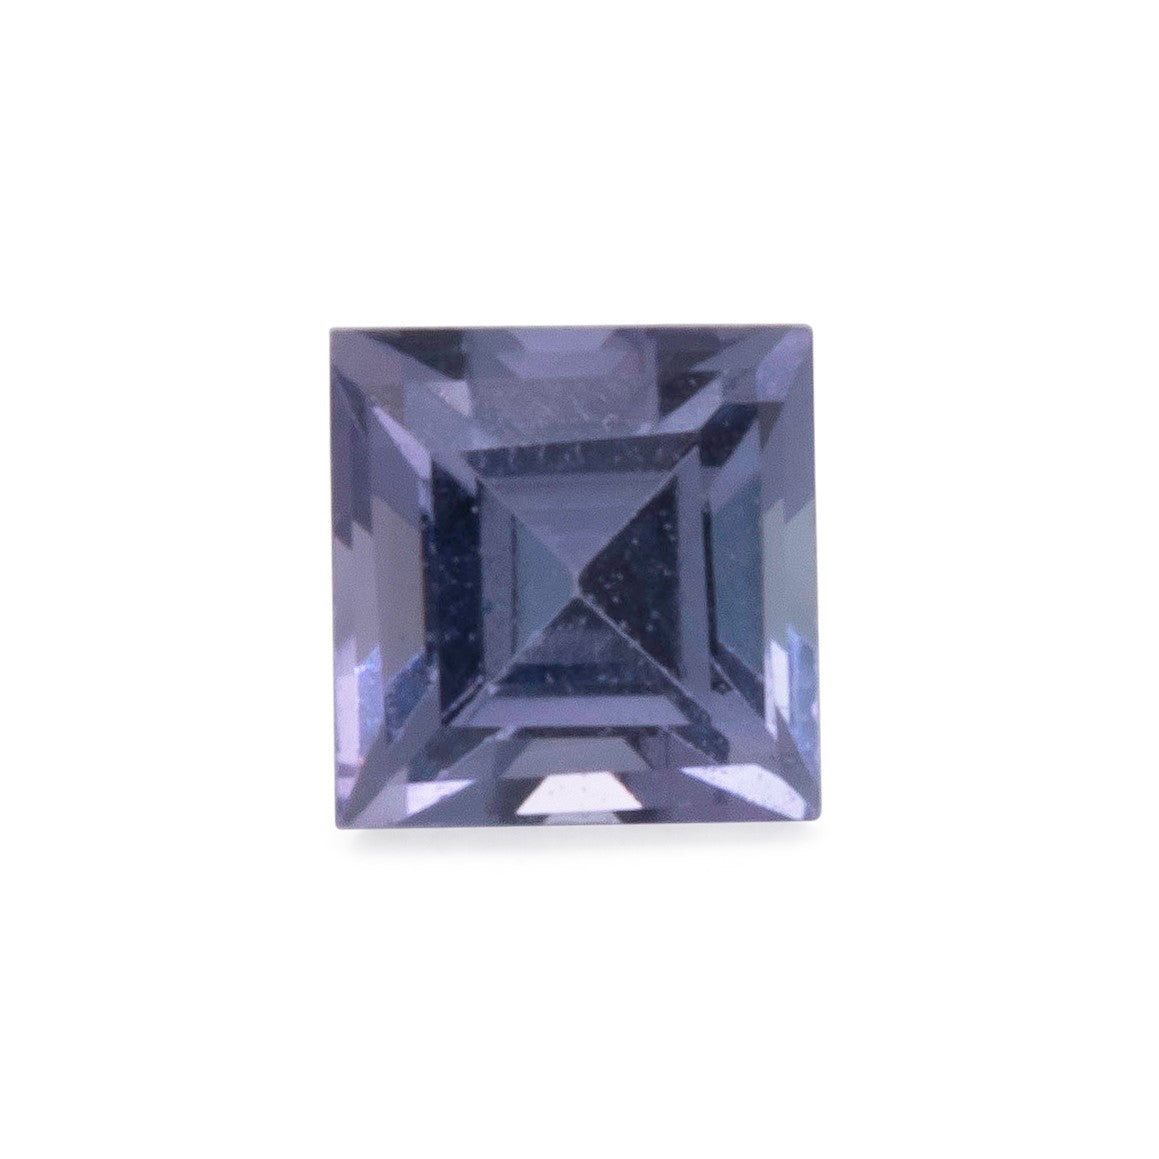 Tanzanite - A, square, 2.5x2.5 mm, 0.09-0.12 cts, No. TZ68001